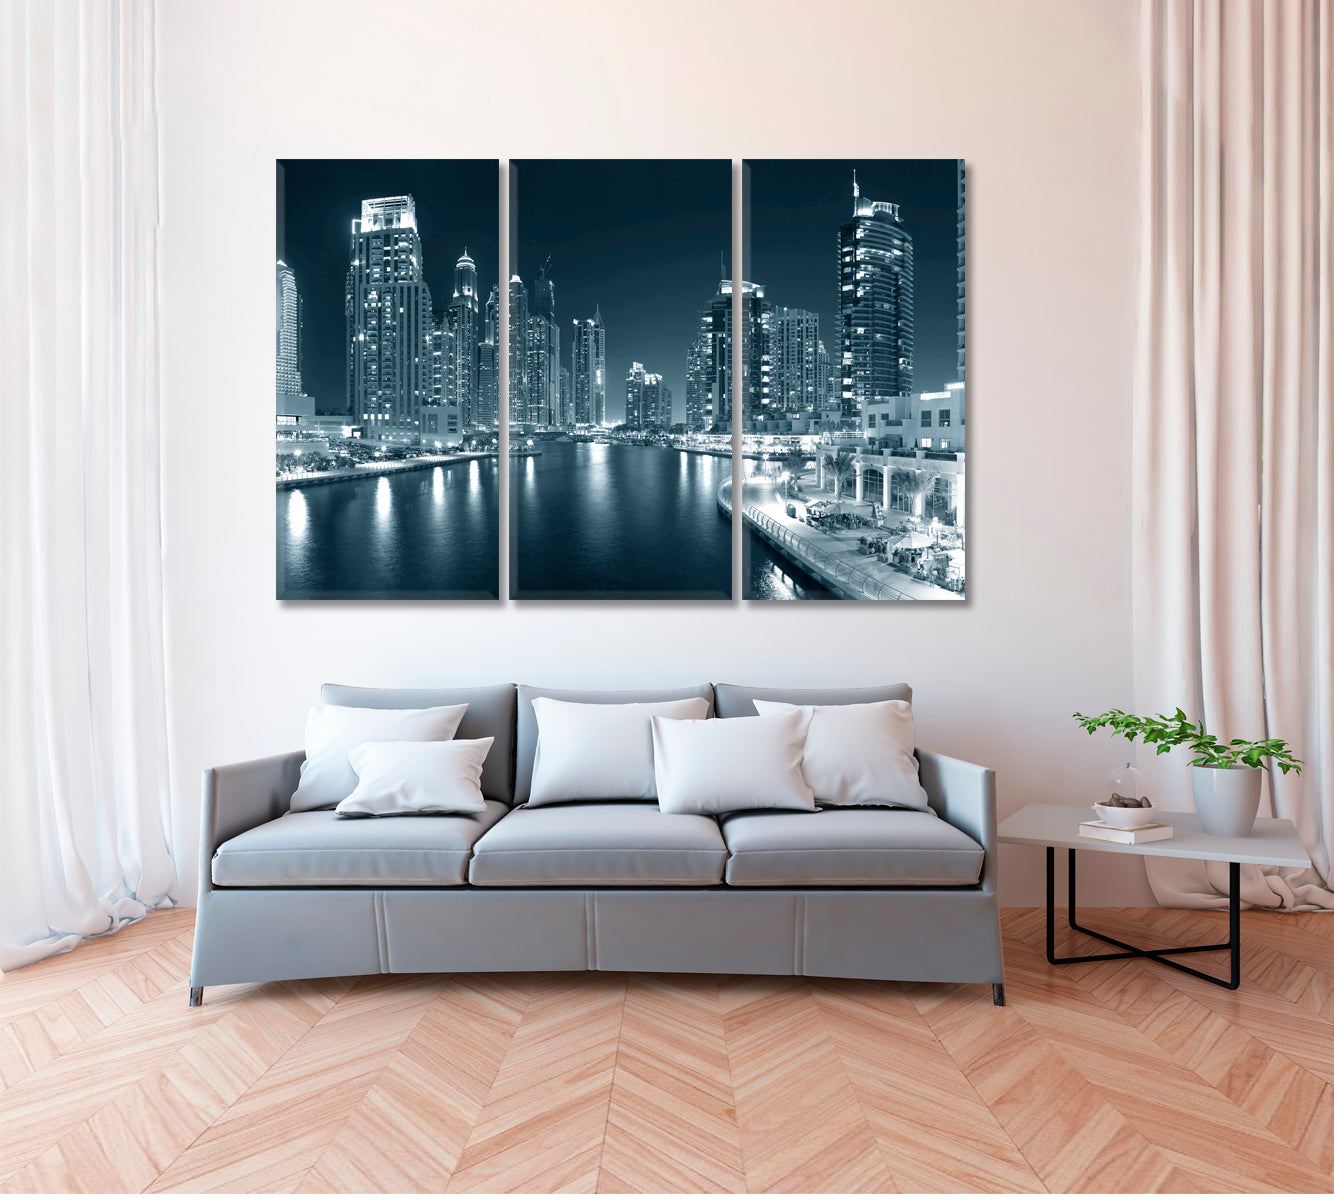 Dubai Marina in Black and White Canvas Print ArtLexy 3 Panels 36"x24" inches 